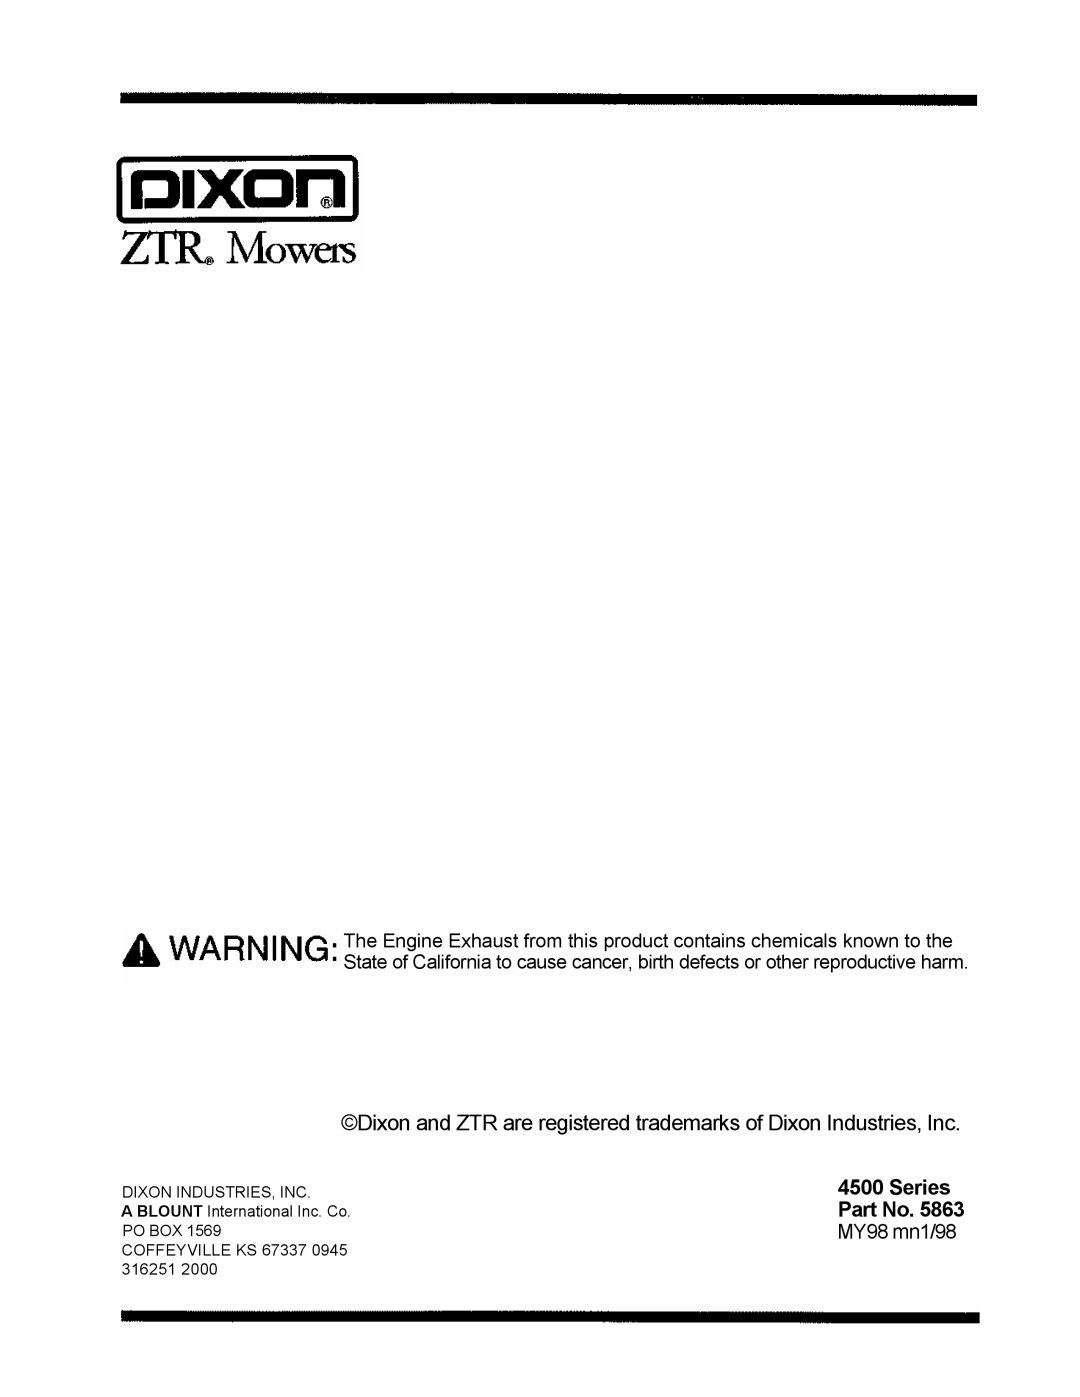 Dixon 1998, ZTR 4515K manual Dixon and ZTR are registered trademarks of Dixon Industries, Inc, Series Part No 